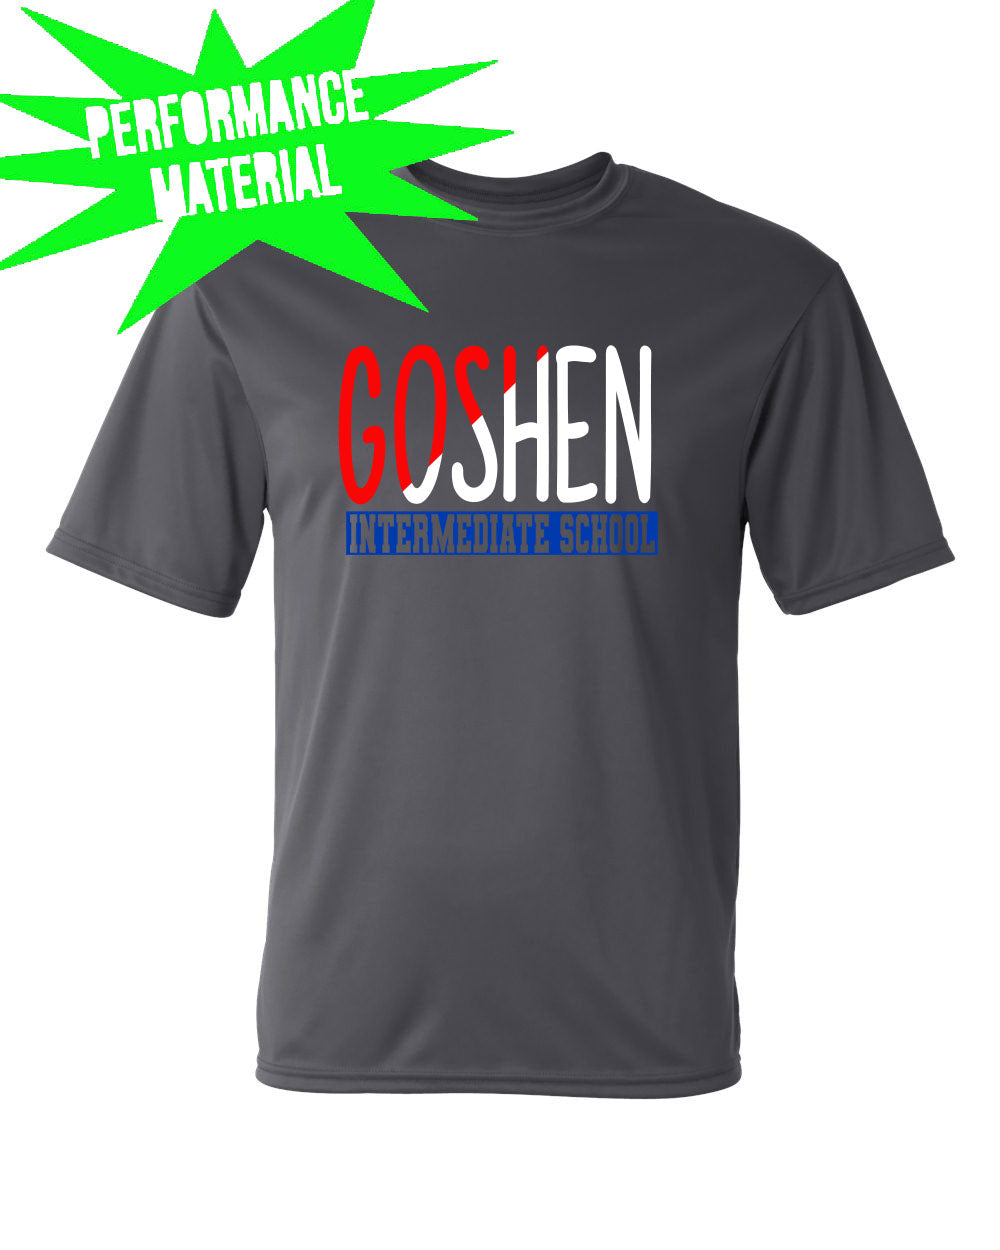 Goshen School Performance Material design 3 T-Shirt